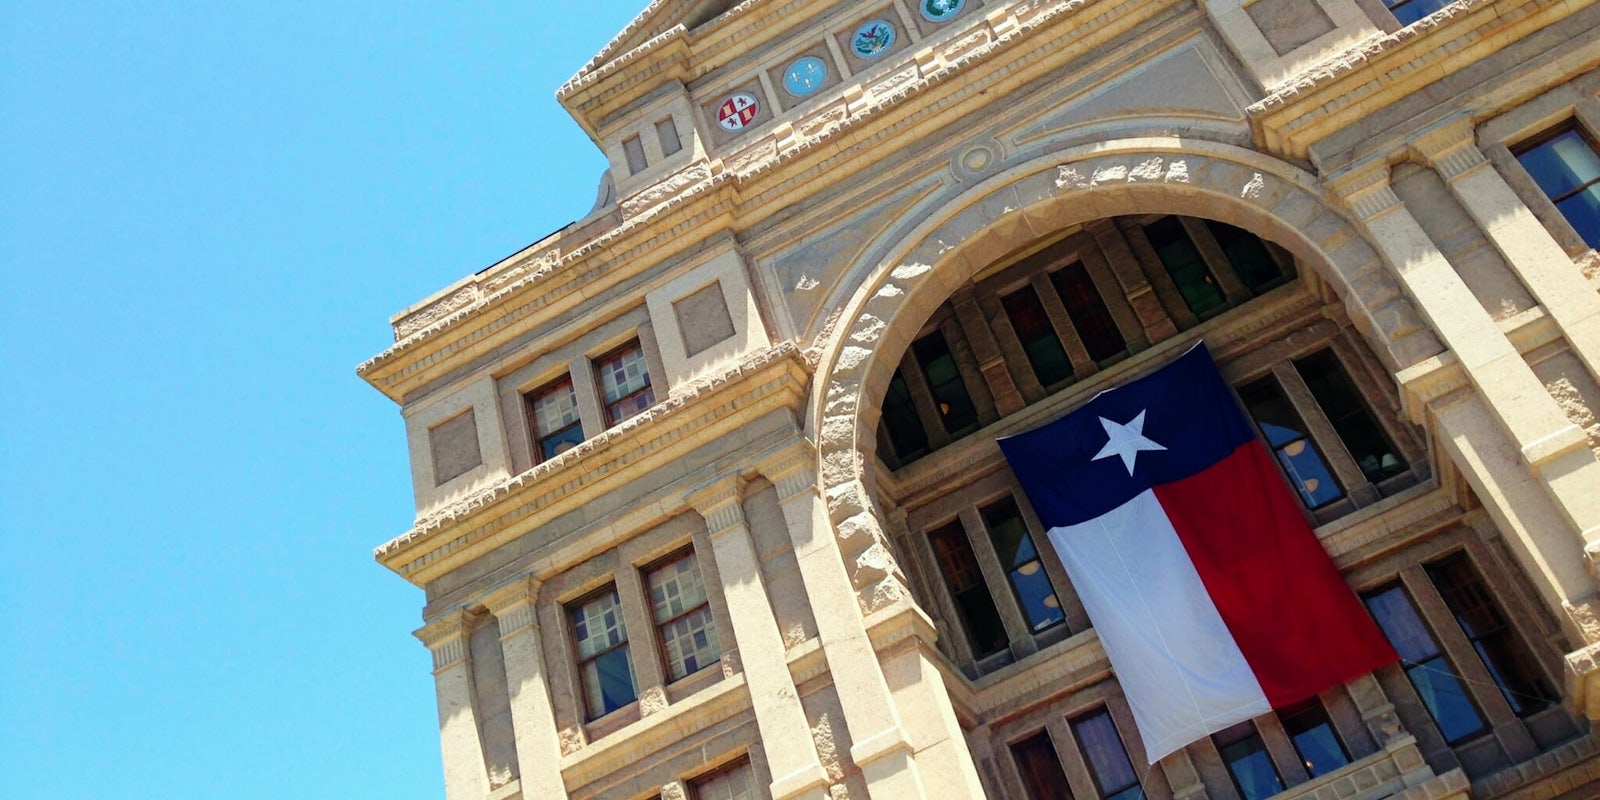 The Texas capitol with a Texas flag.